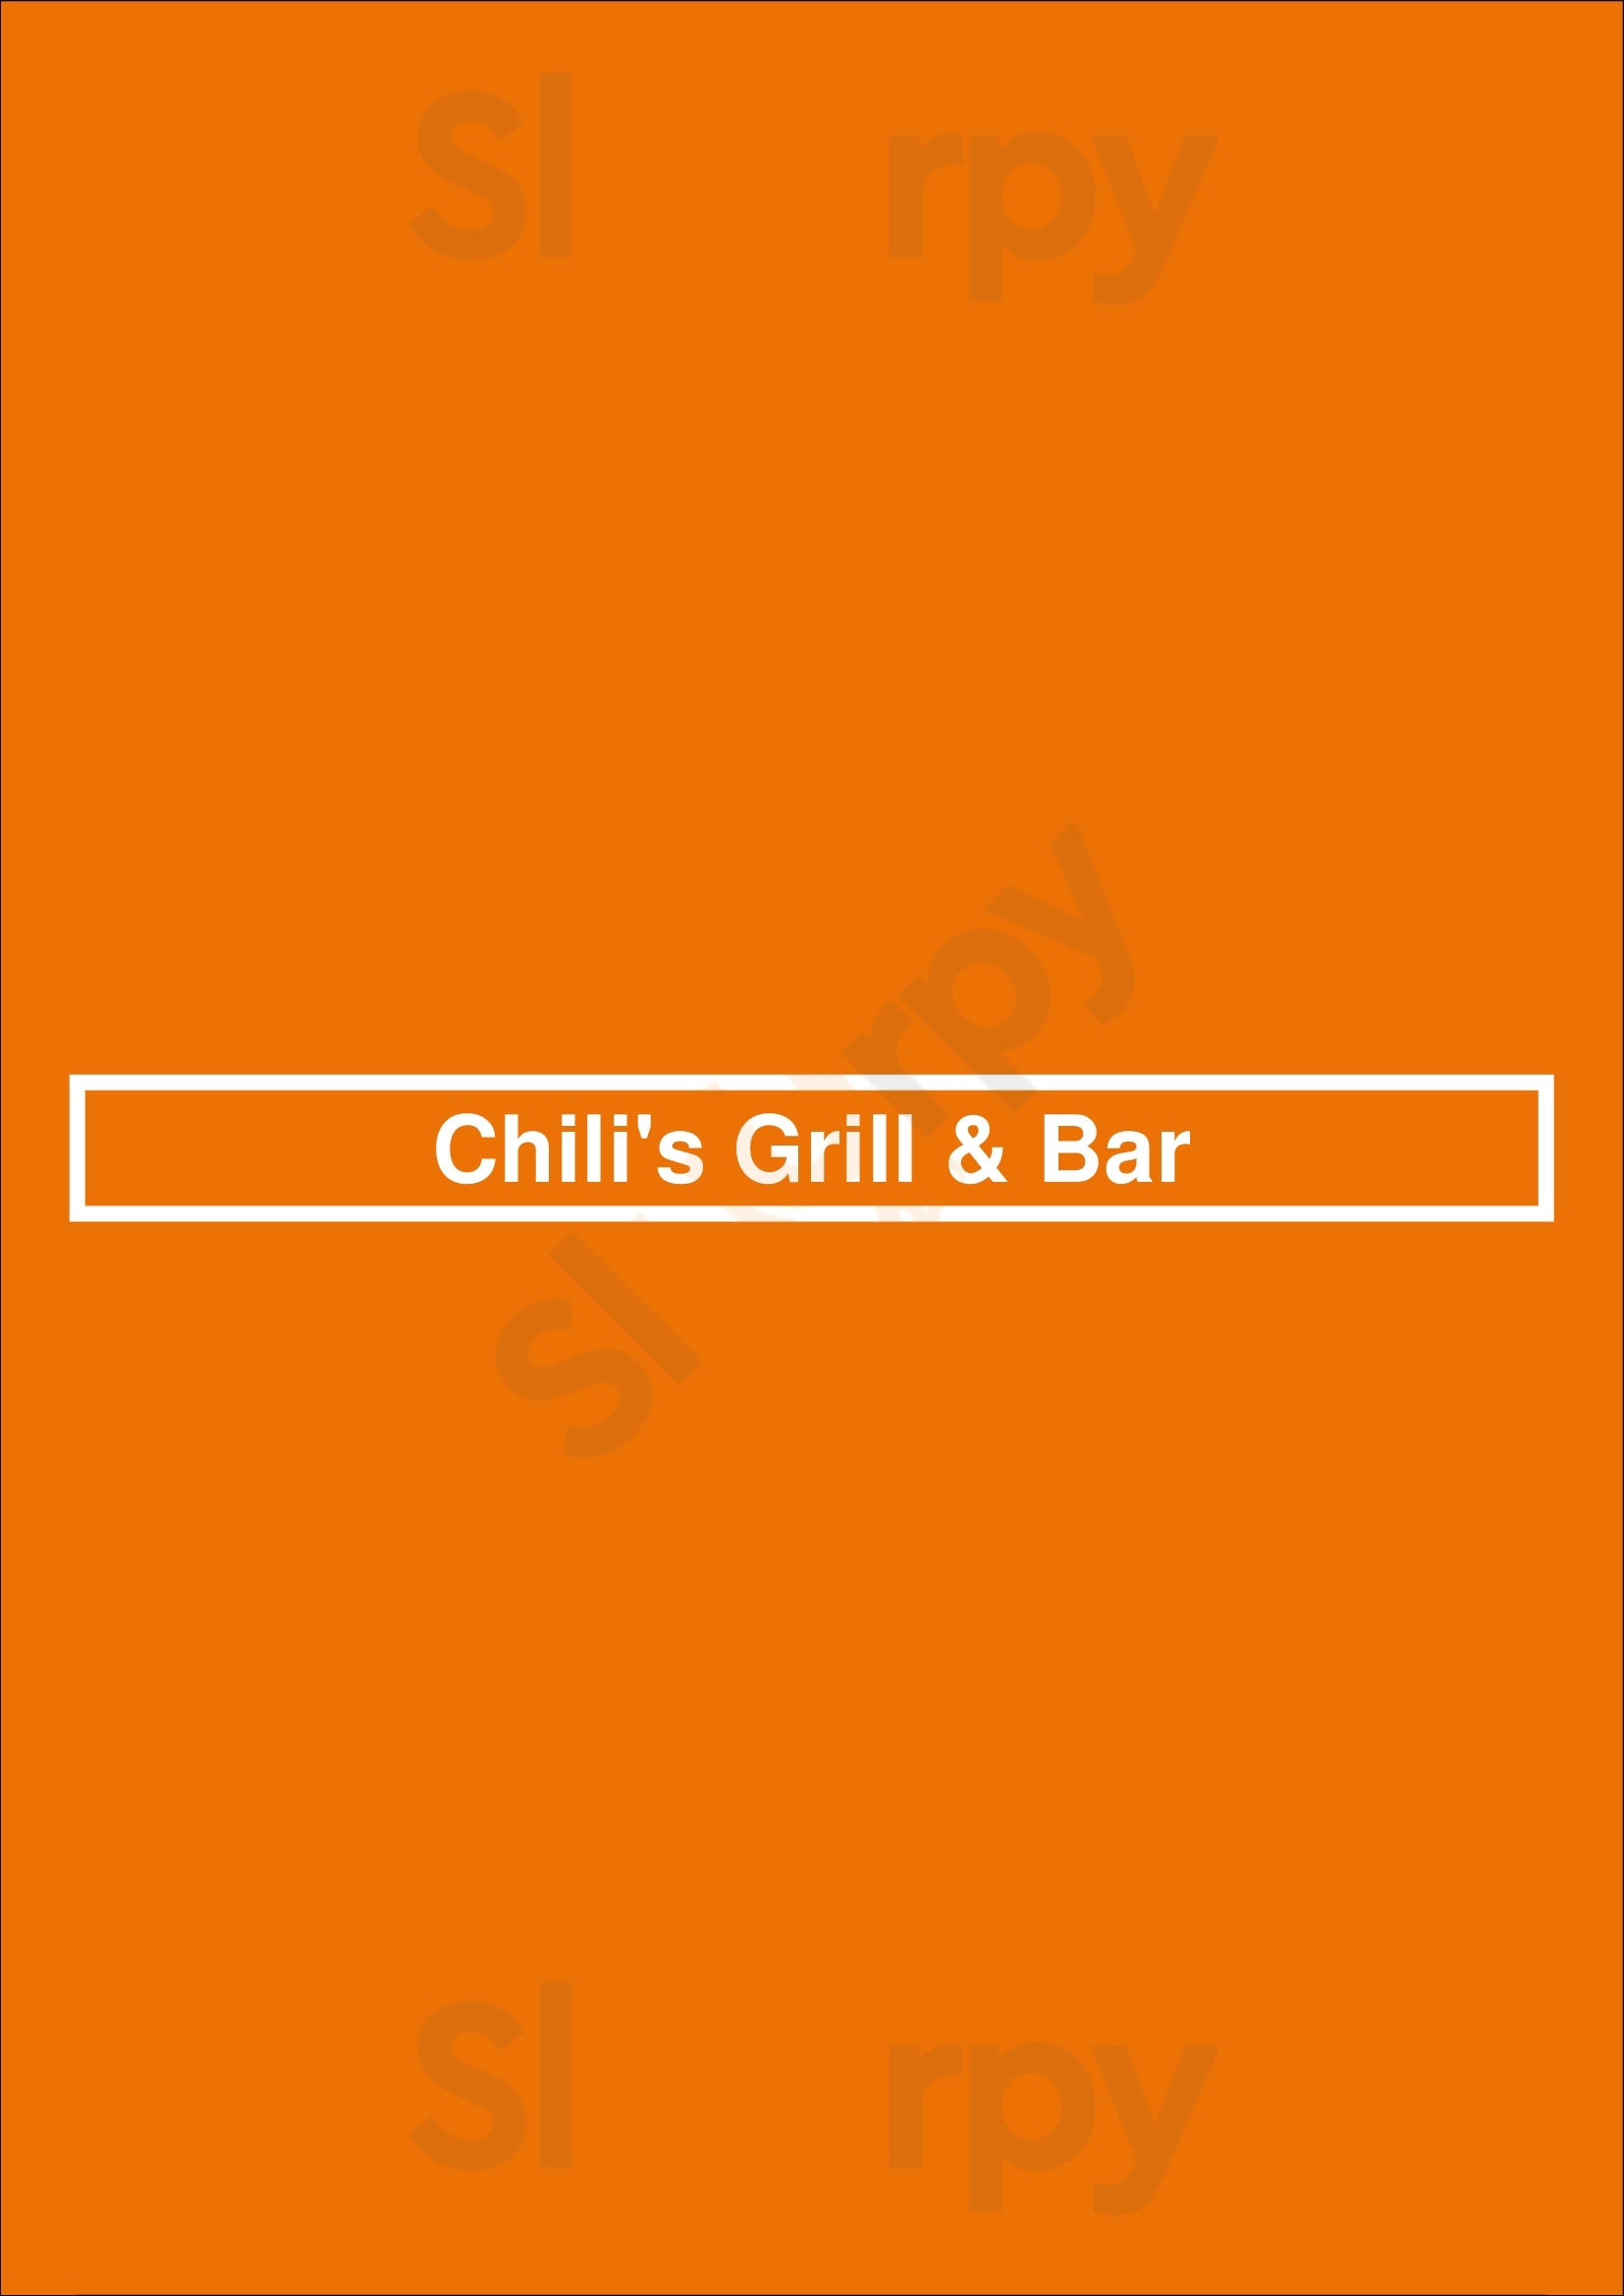 Chili's Grill & Bar Fresno Menu - 1